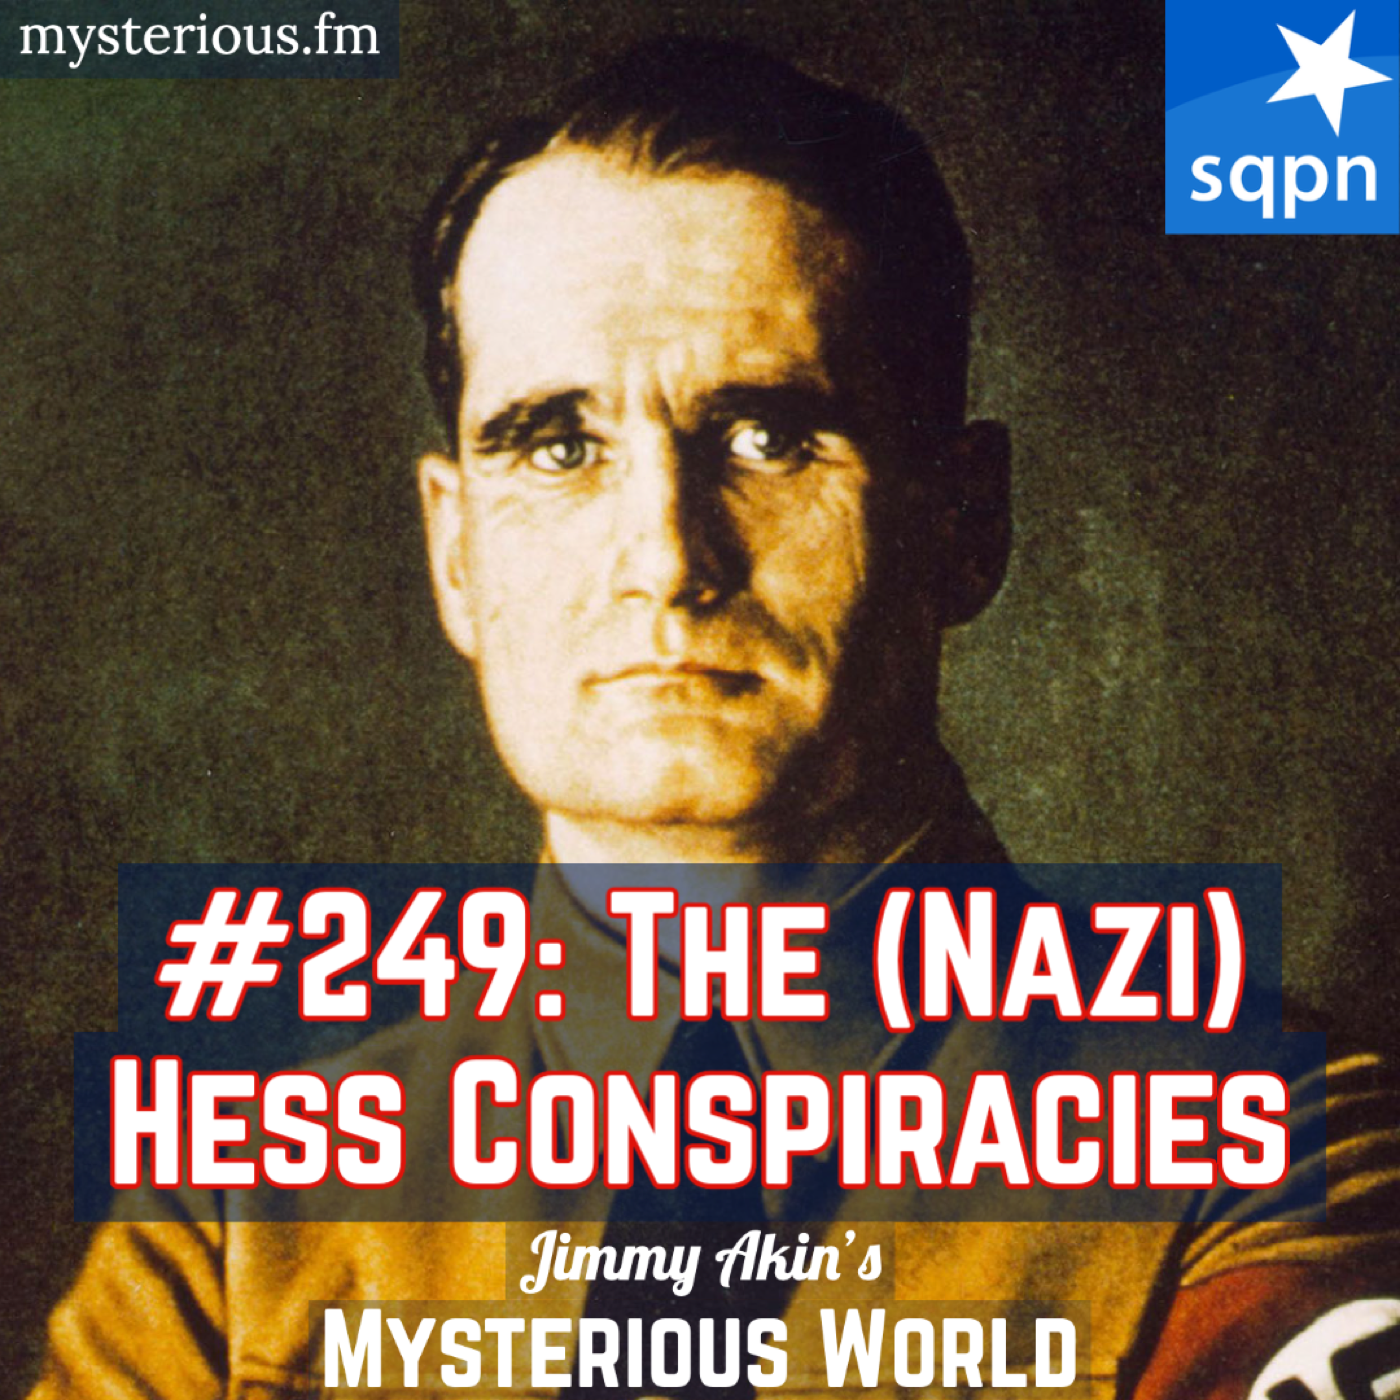 The (Nazi) Hess Conspiracies (Rudolf Hess)